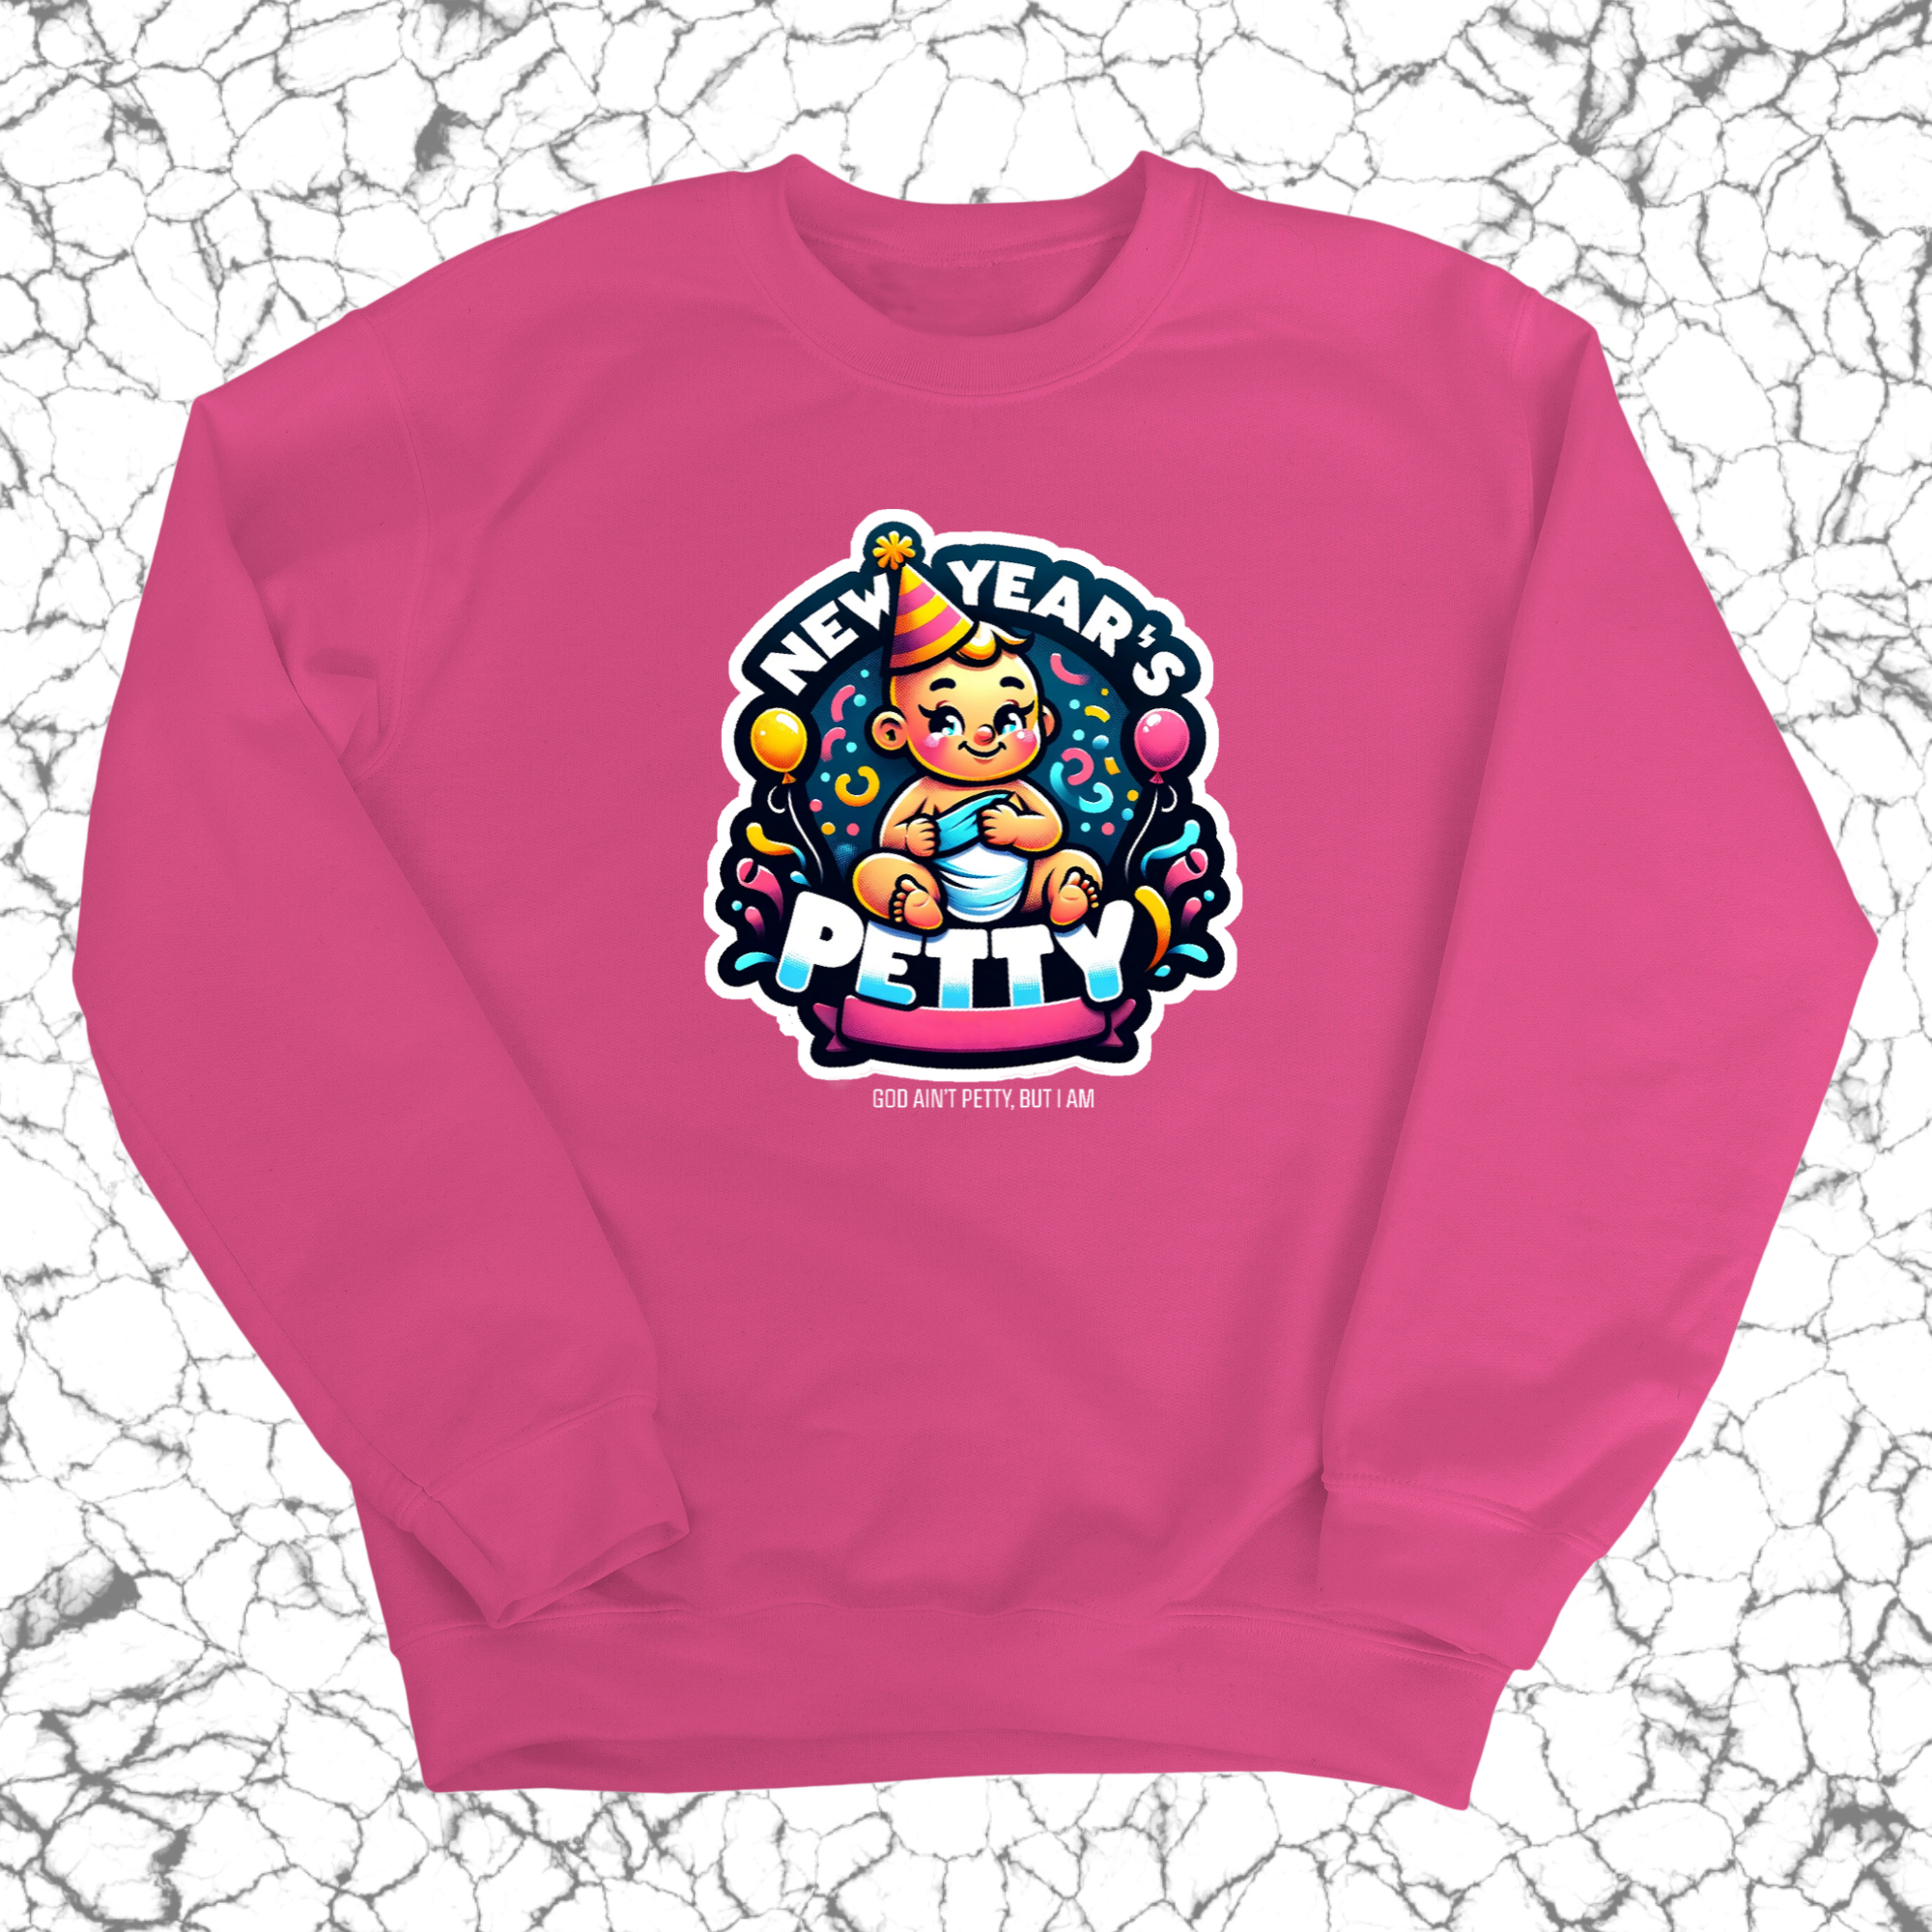 New Year's Petty Unisex Sweatshirt-Sweatshirt-The Original God Ain't Petty But I Am